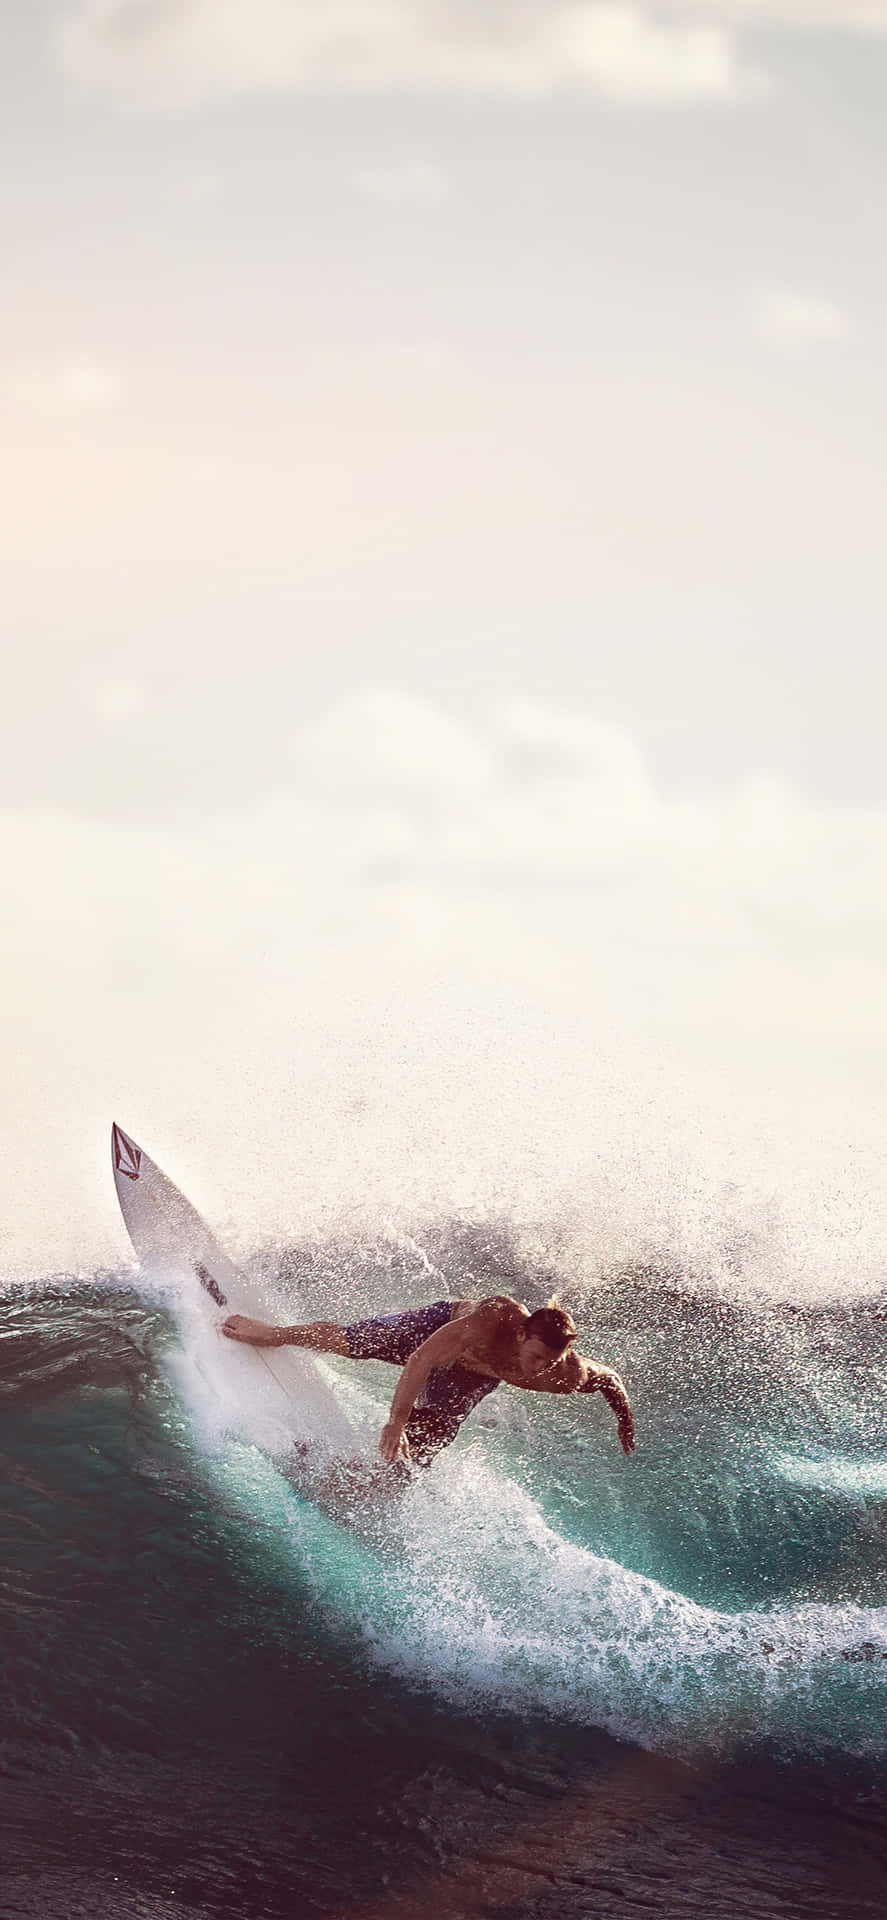 Surfing Iphone 1125 X 2436 Wallpaper